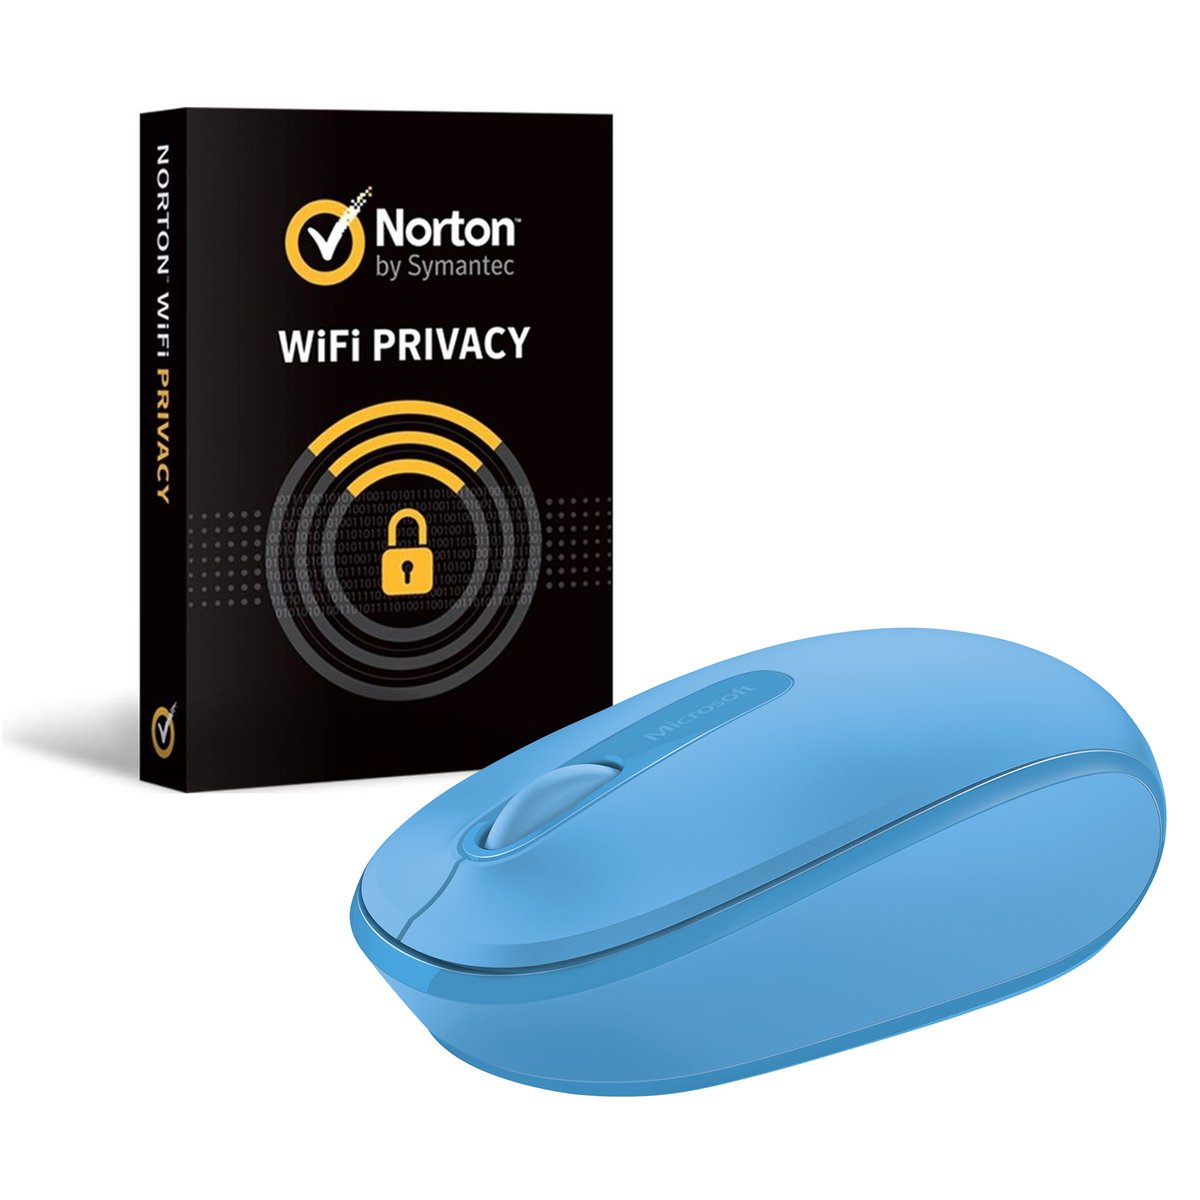 Microsoft Wireless Mouse 1850 + Norton WiFi Privacy (Combo Pack)